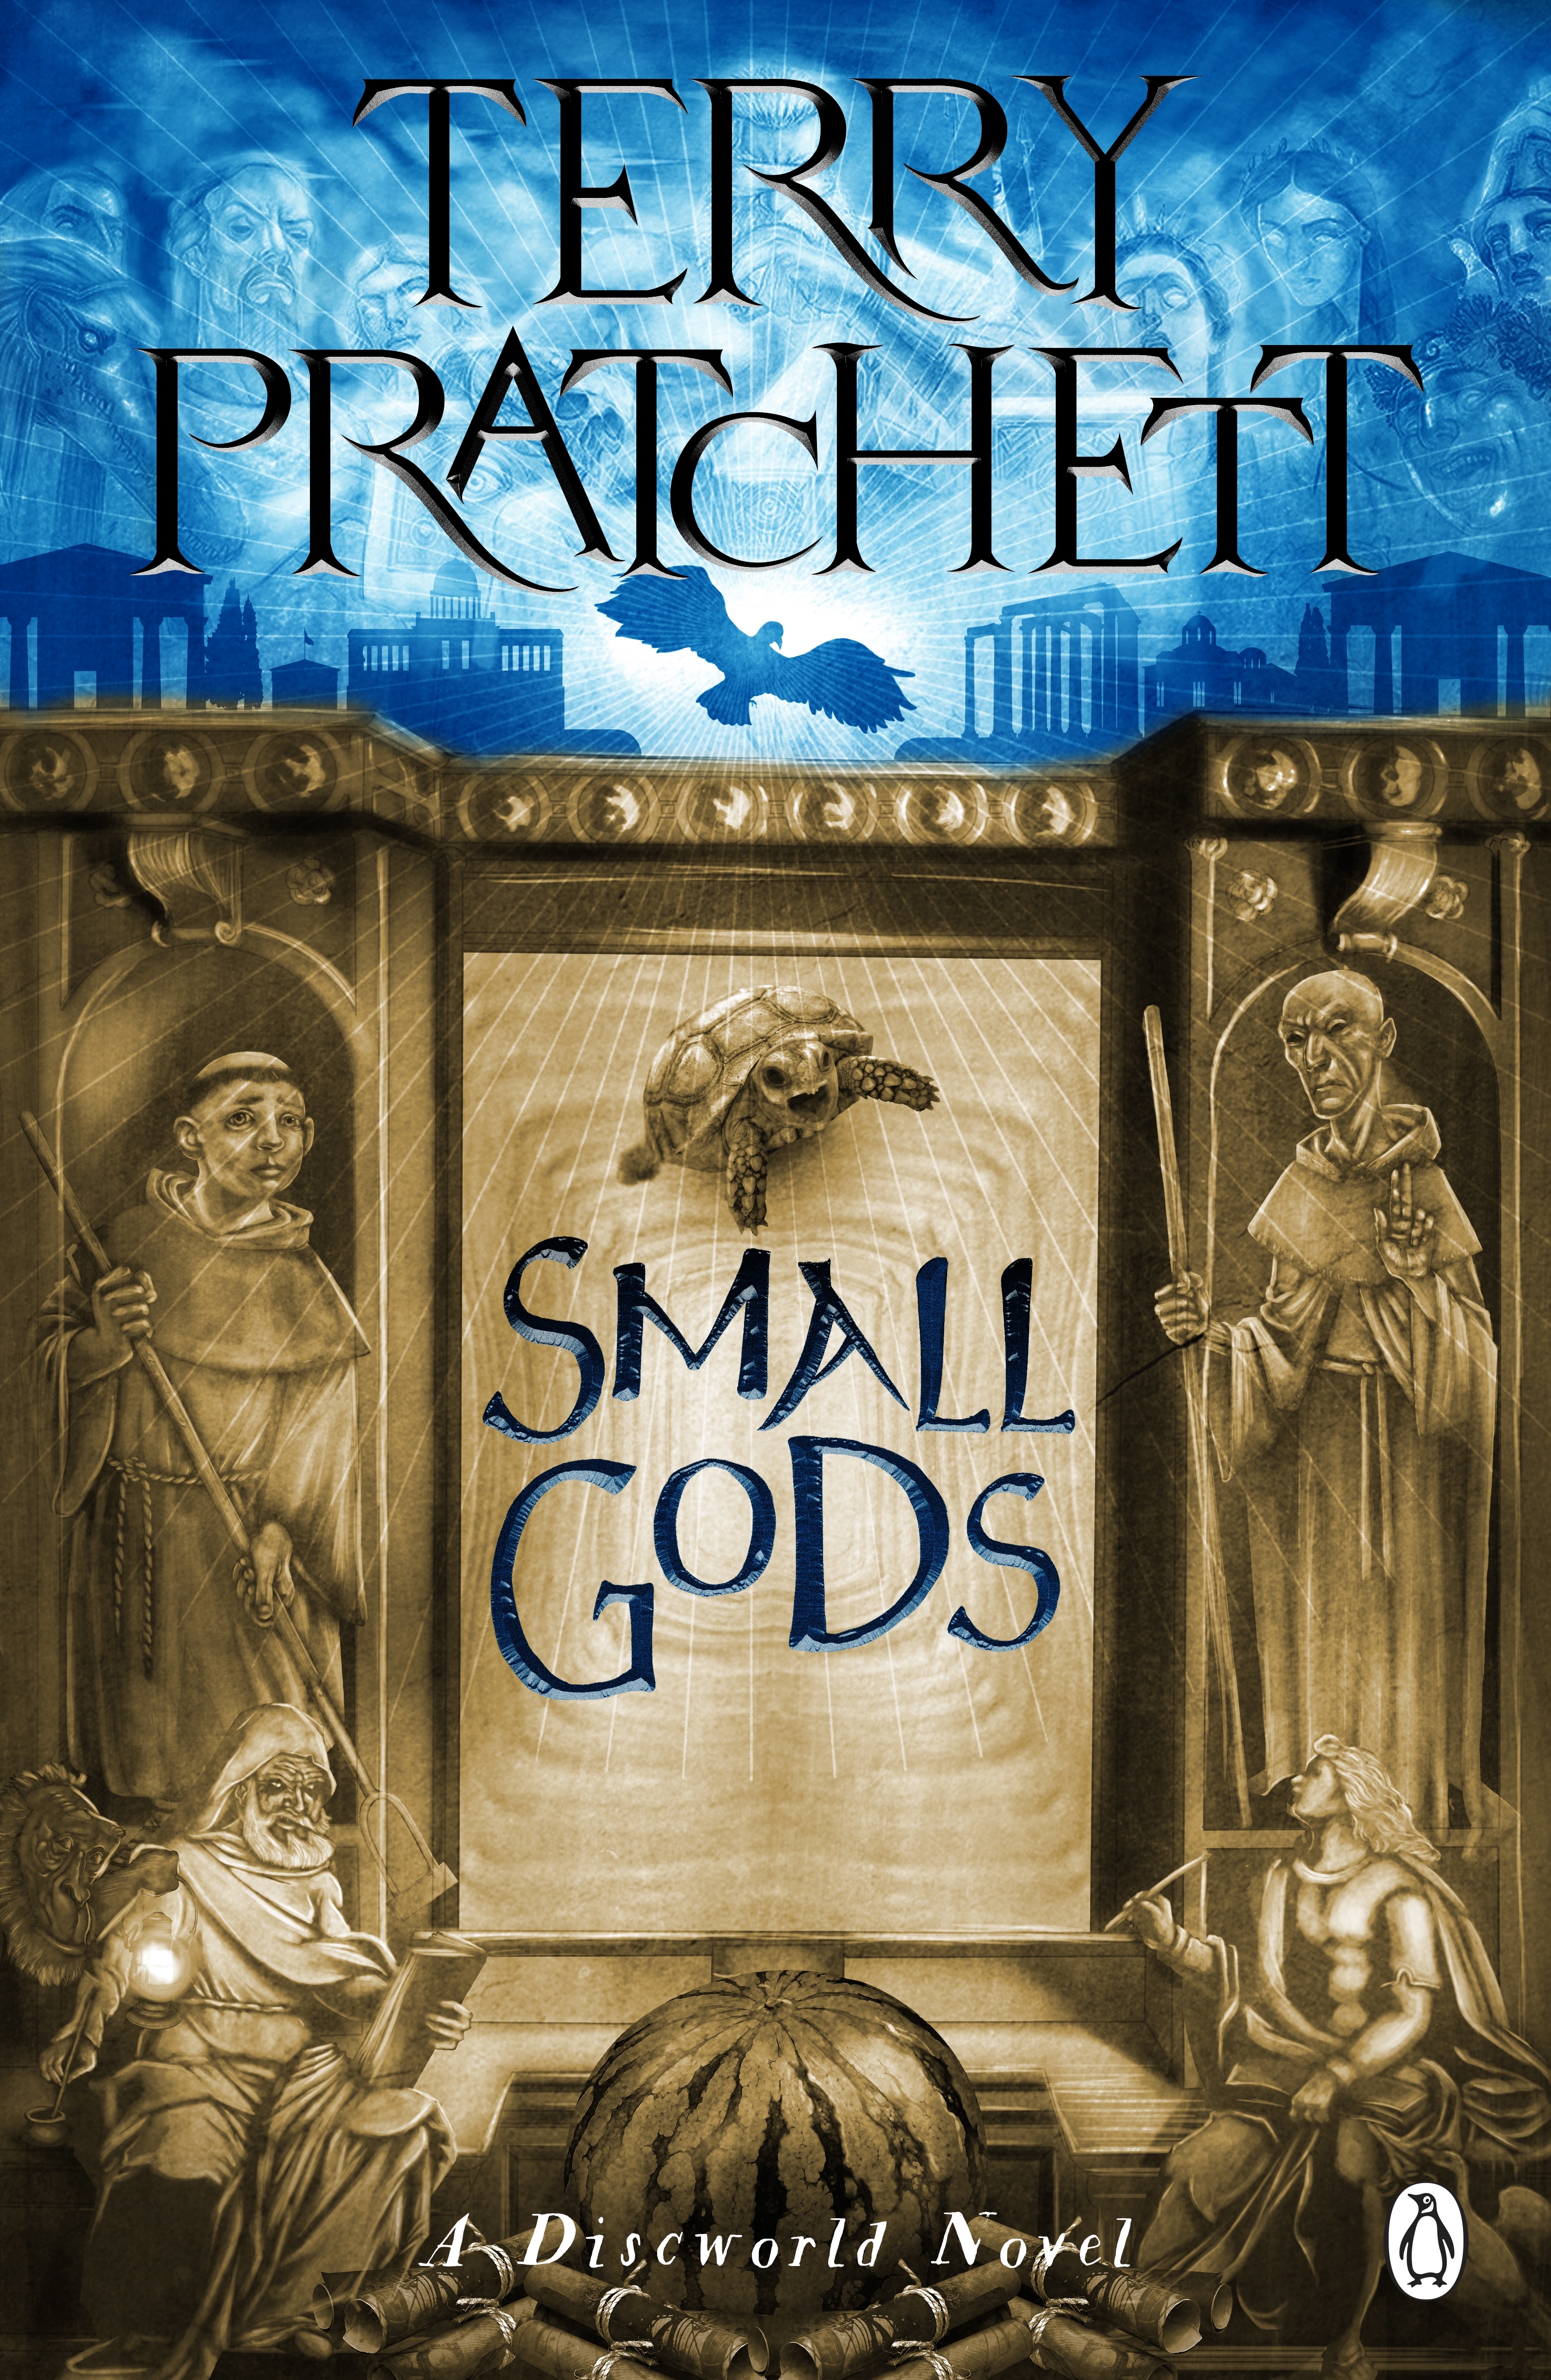 Book “Small Gods” by Terry Pratchett — April 28, 2022